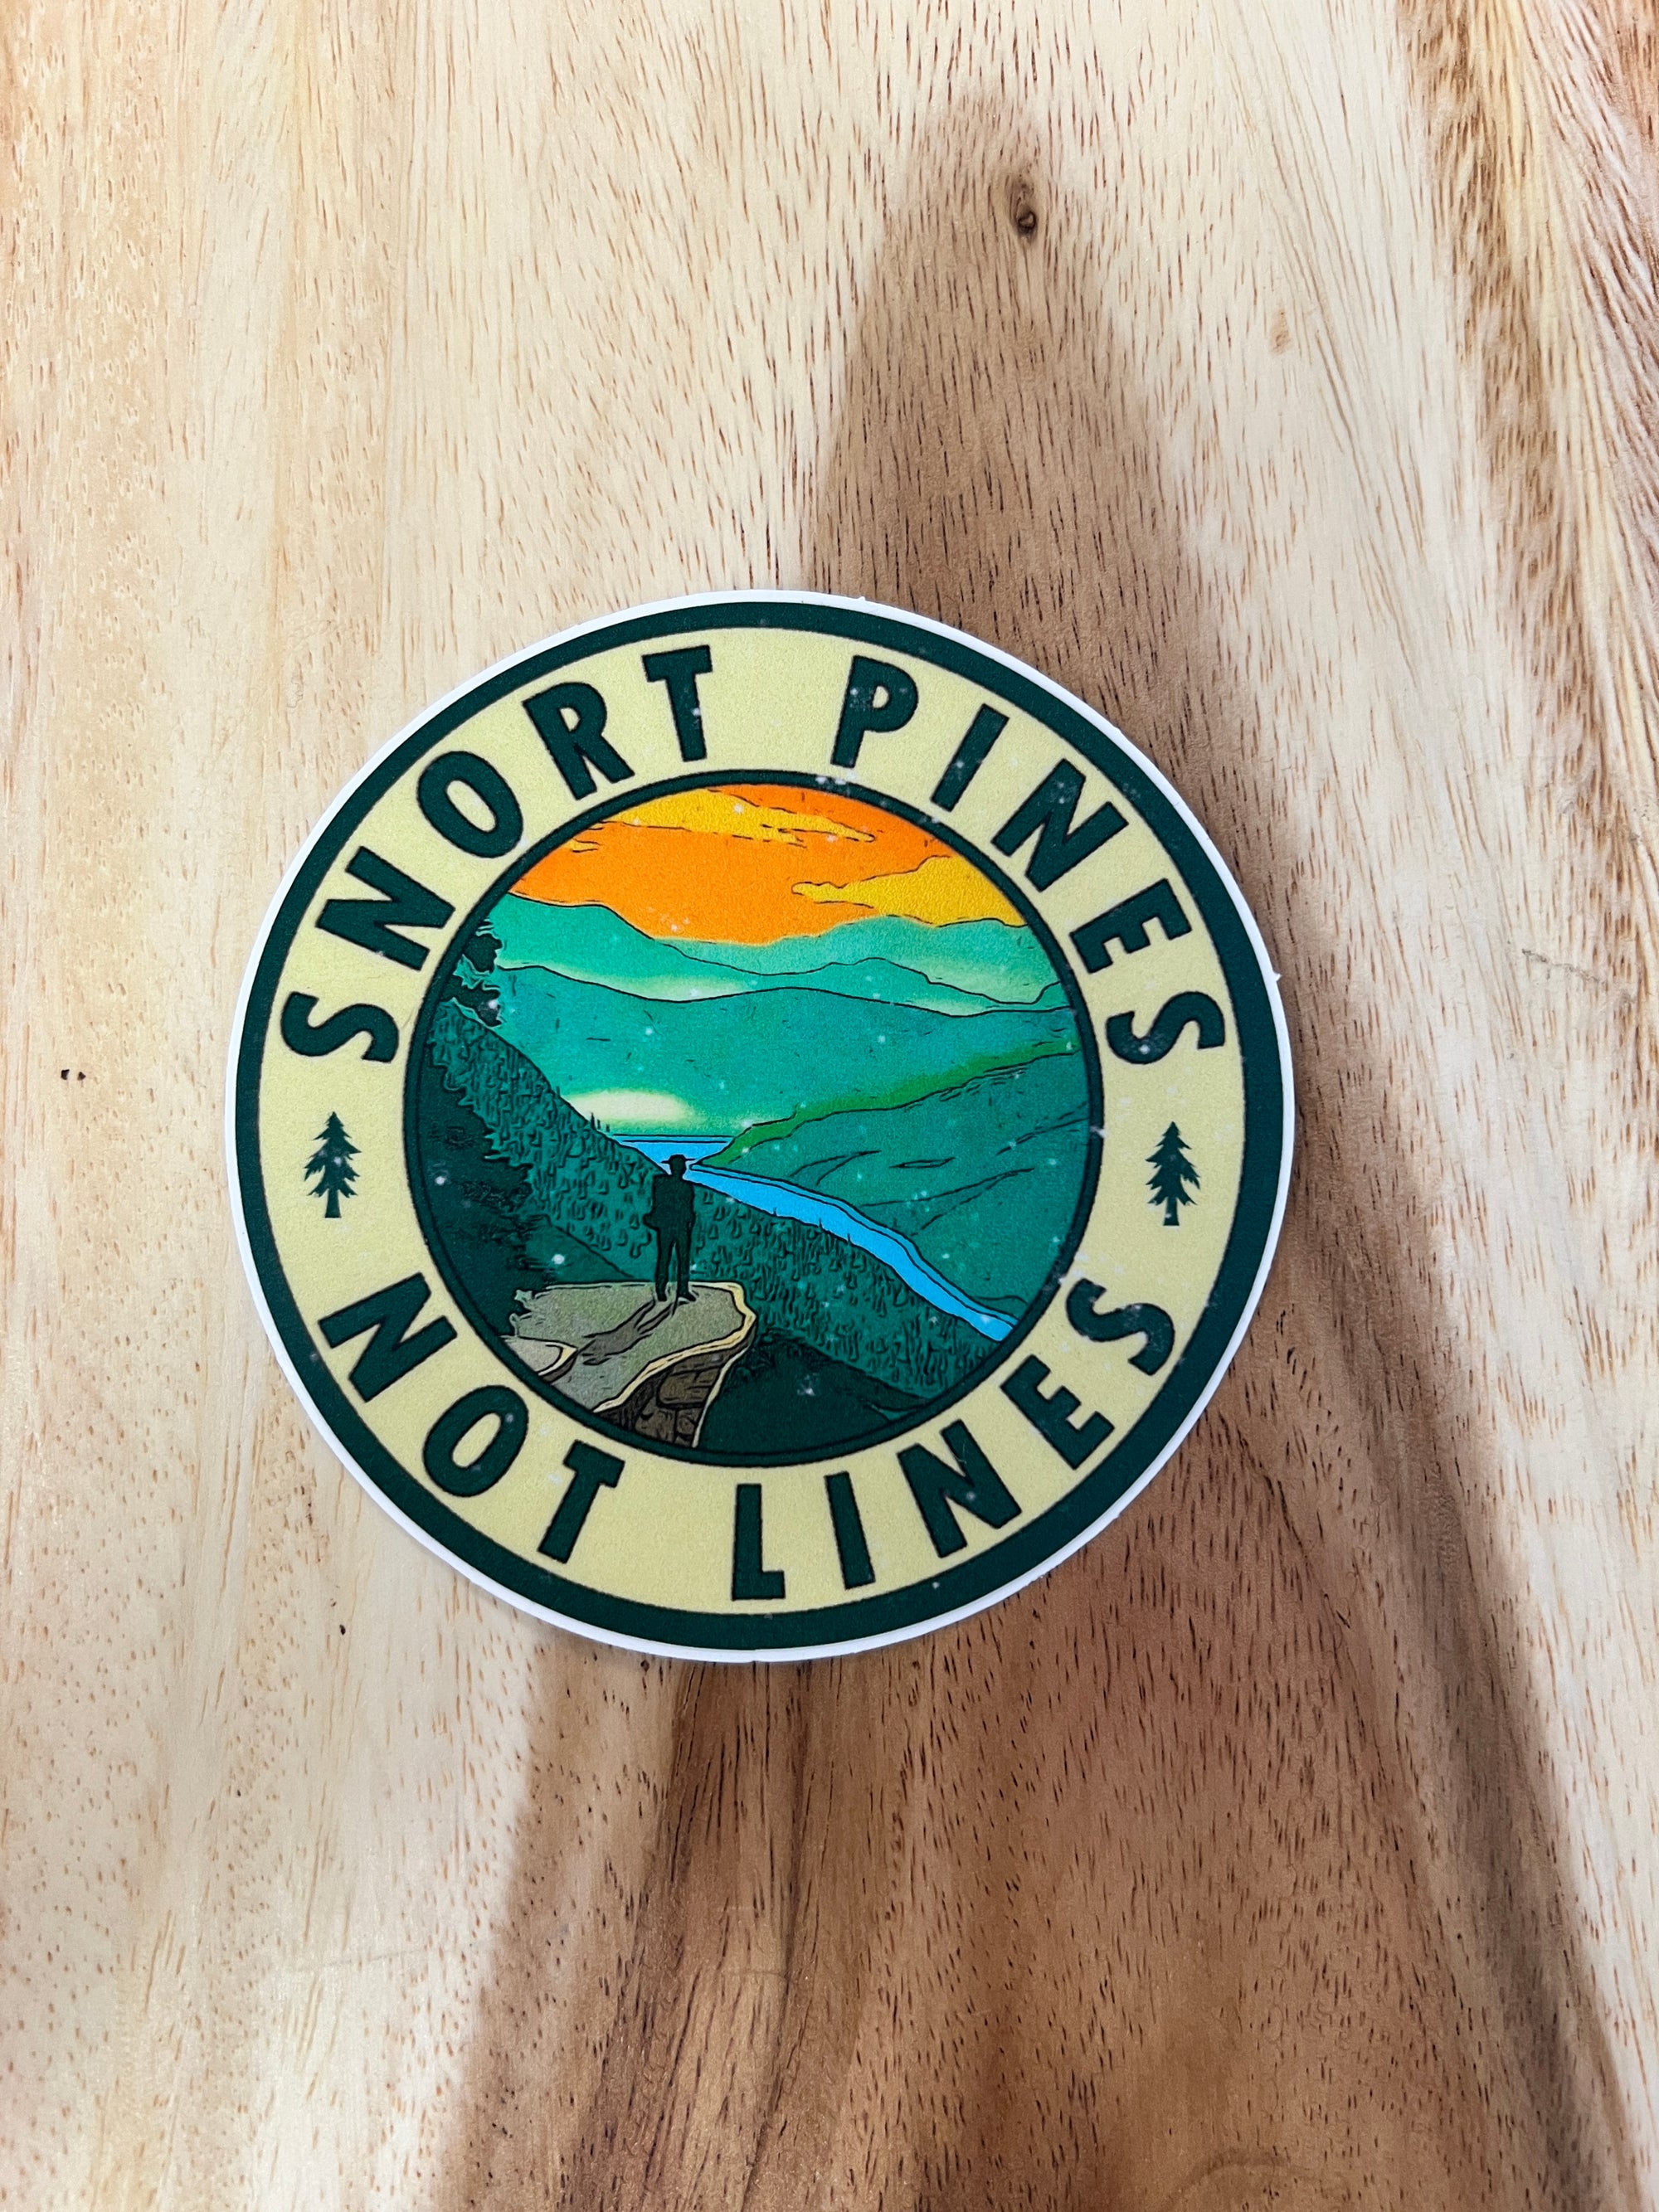 Snort Pines Not Lines Sticker